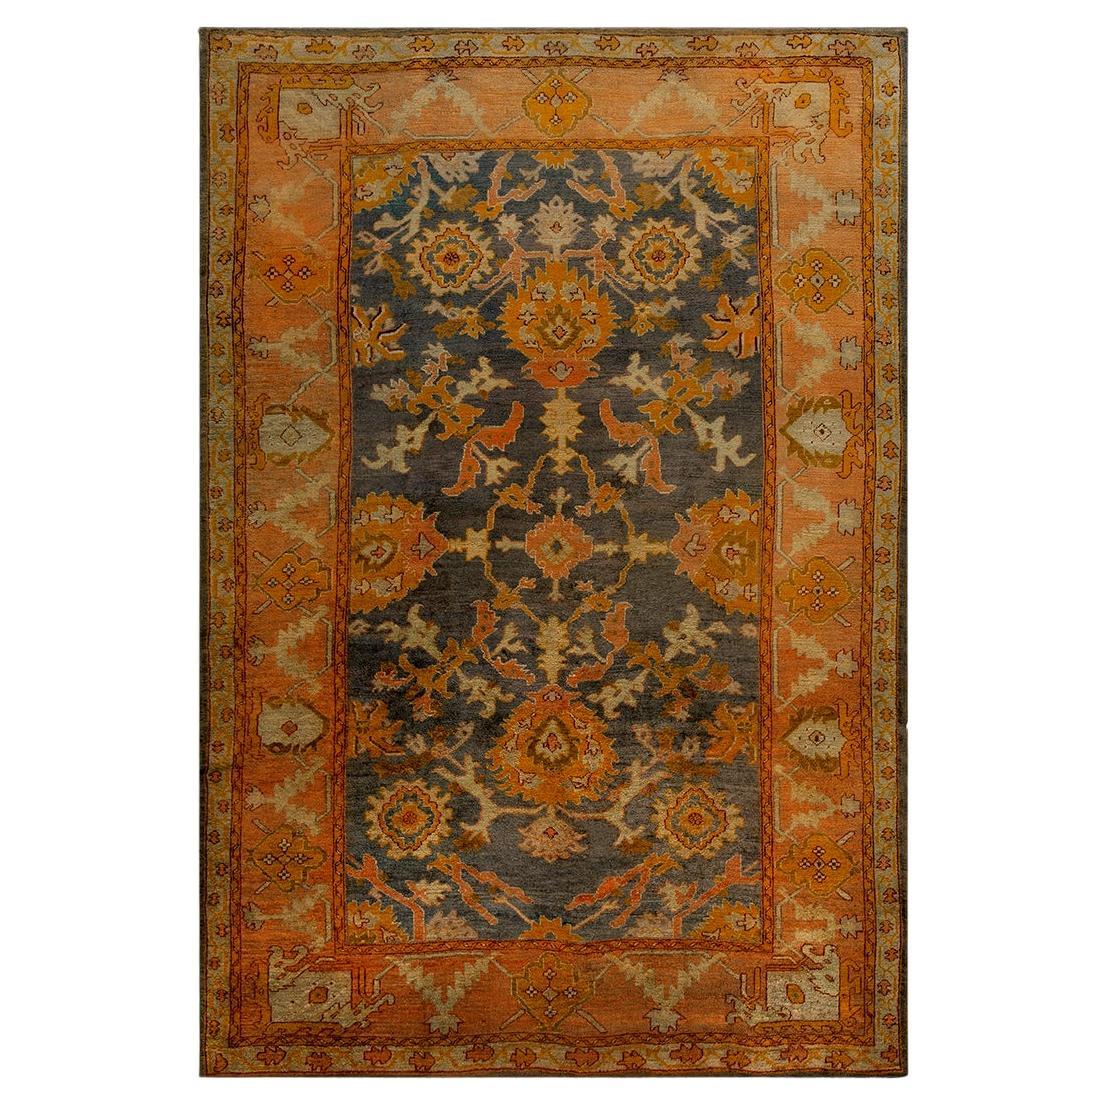 19th Century Turkish Oushak Carpet ( 8'3" x 12'4" - 252 x 376 )